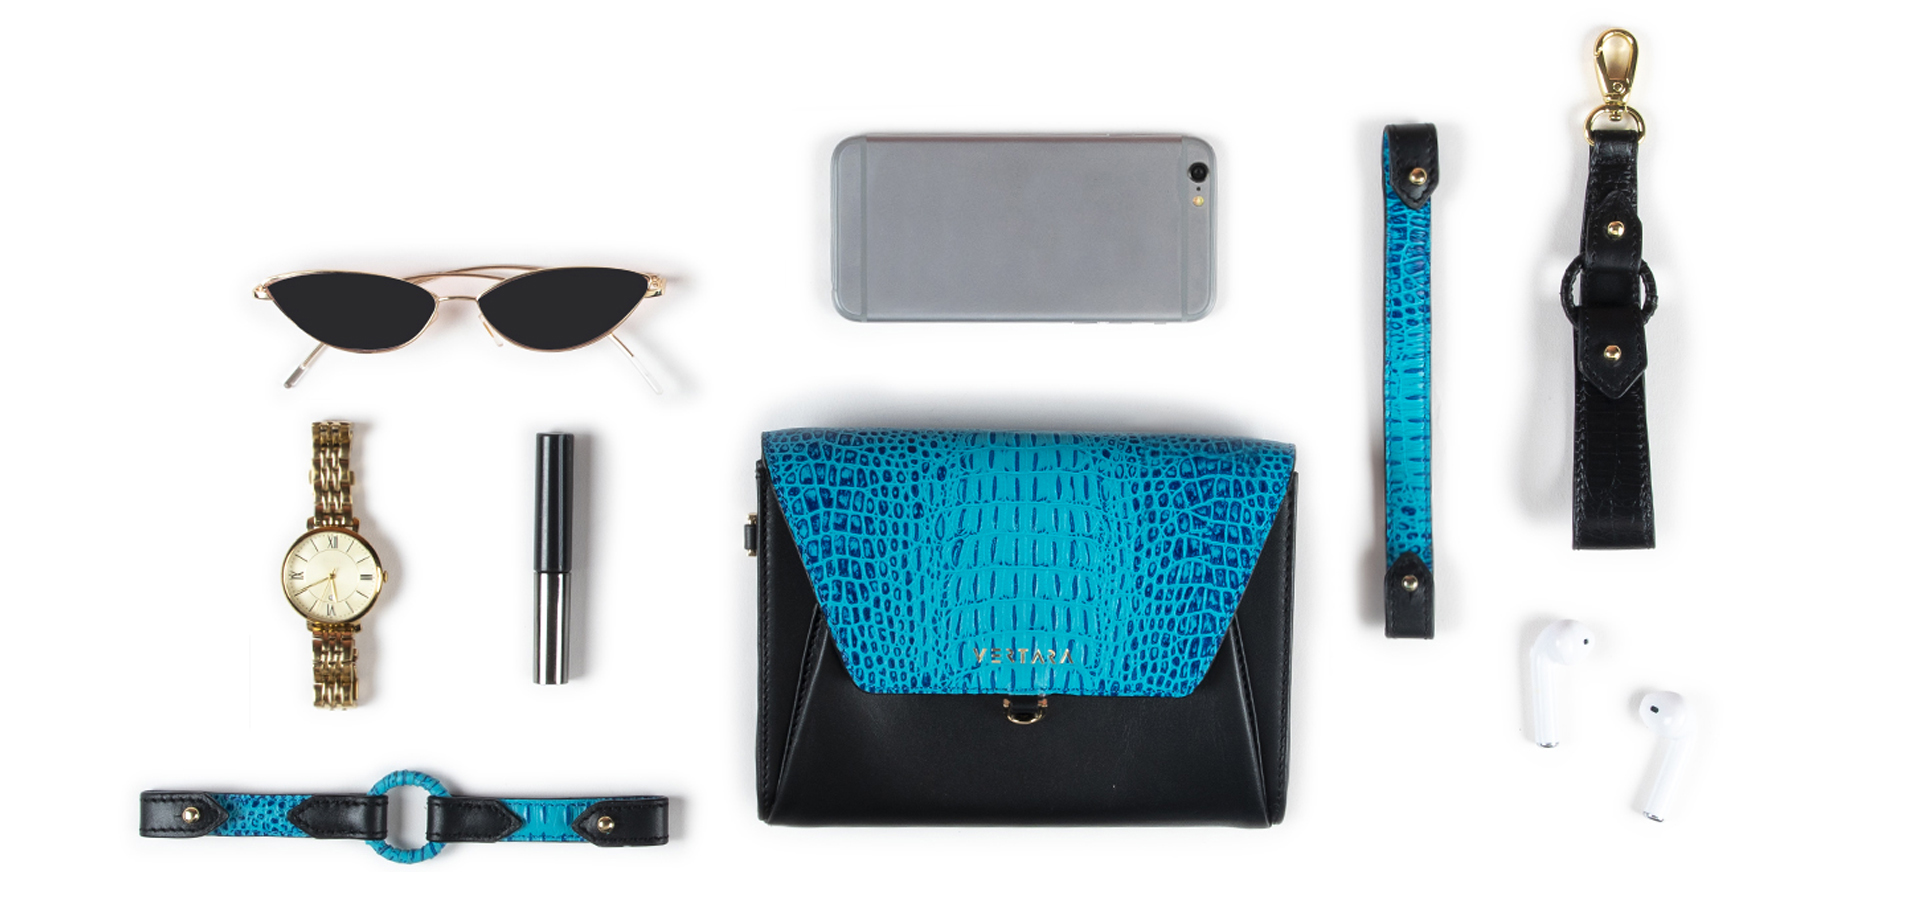 Ember Sleek wallet, Clutch & wristlet with Ember Bracelets in Black & Turquoise Leather fits cards, cash & phone